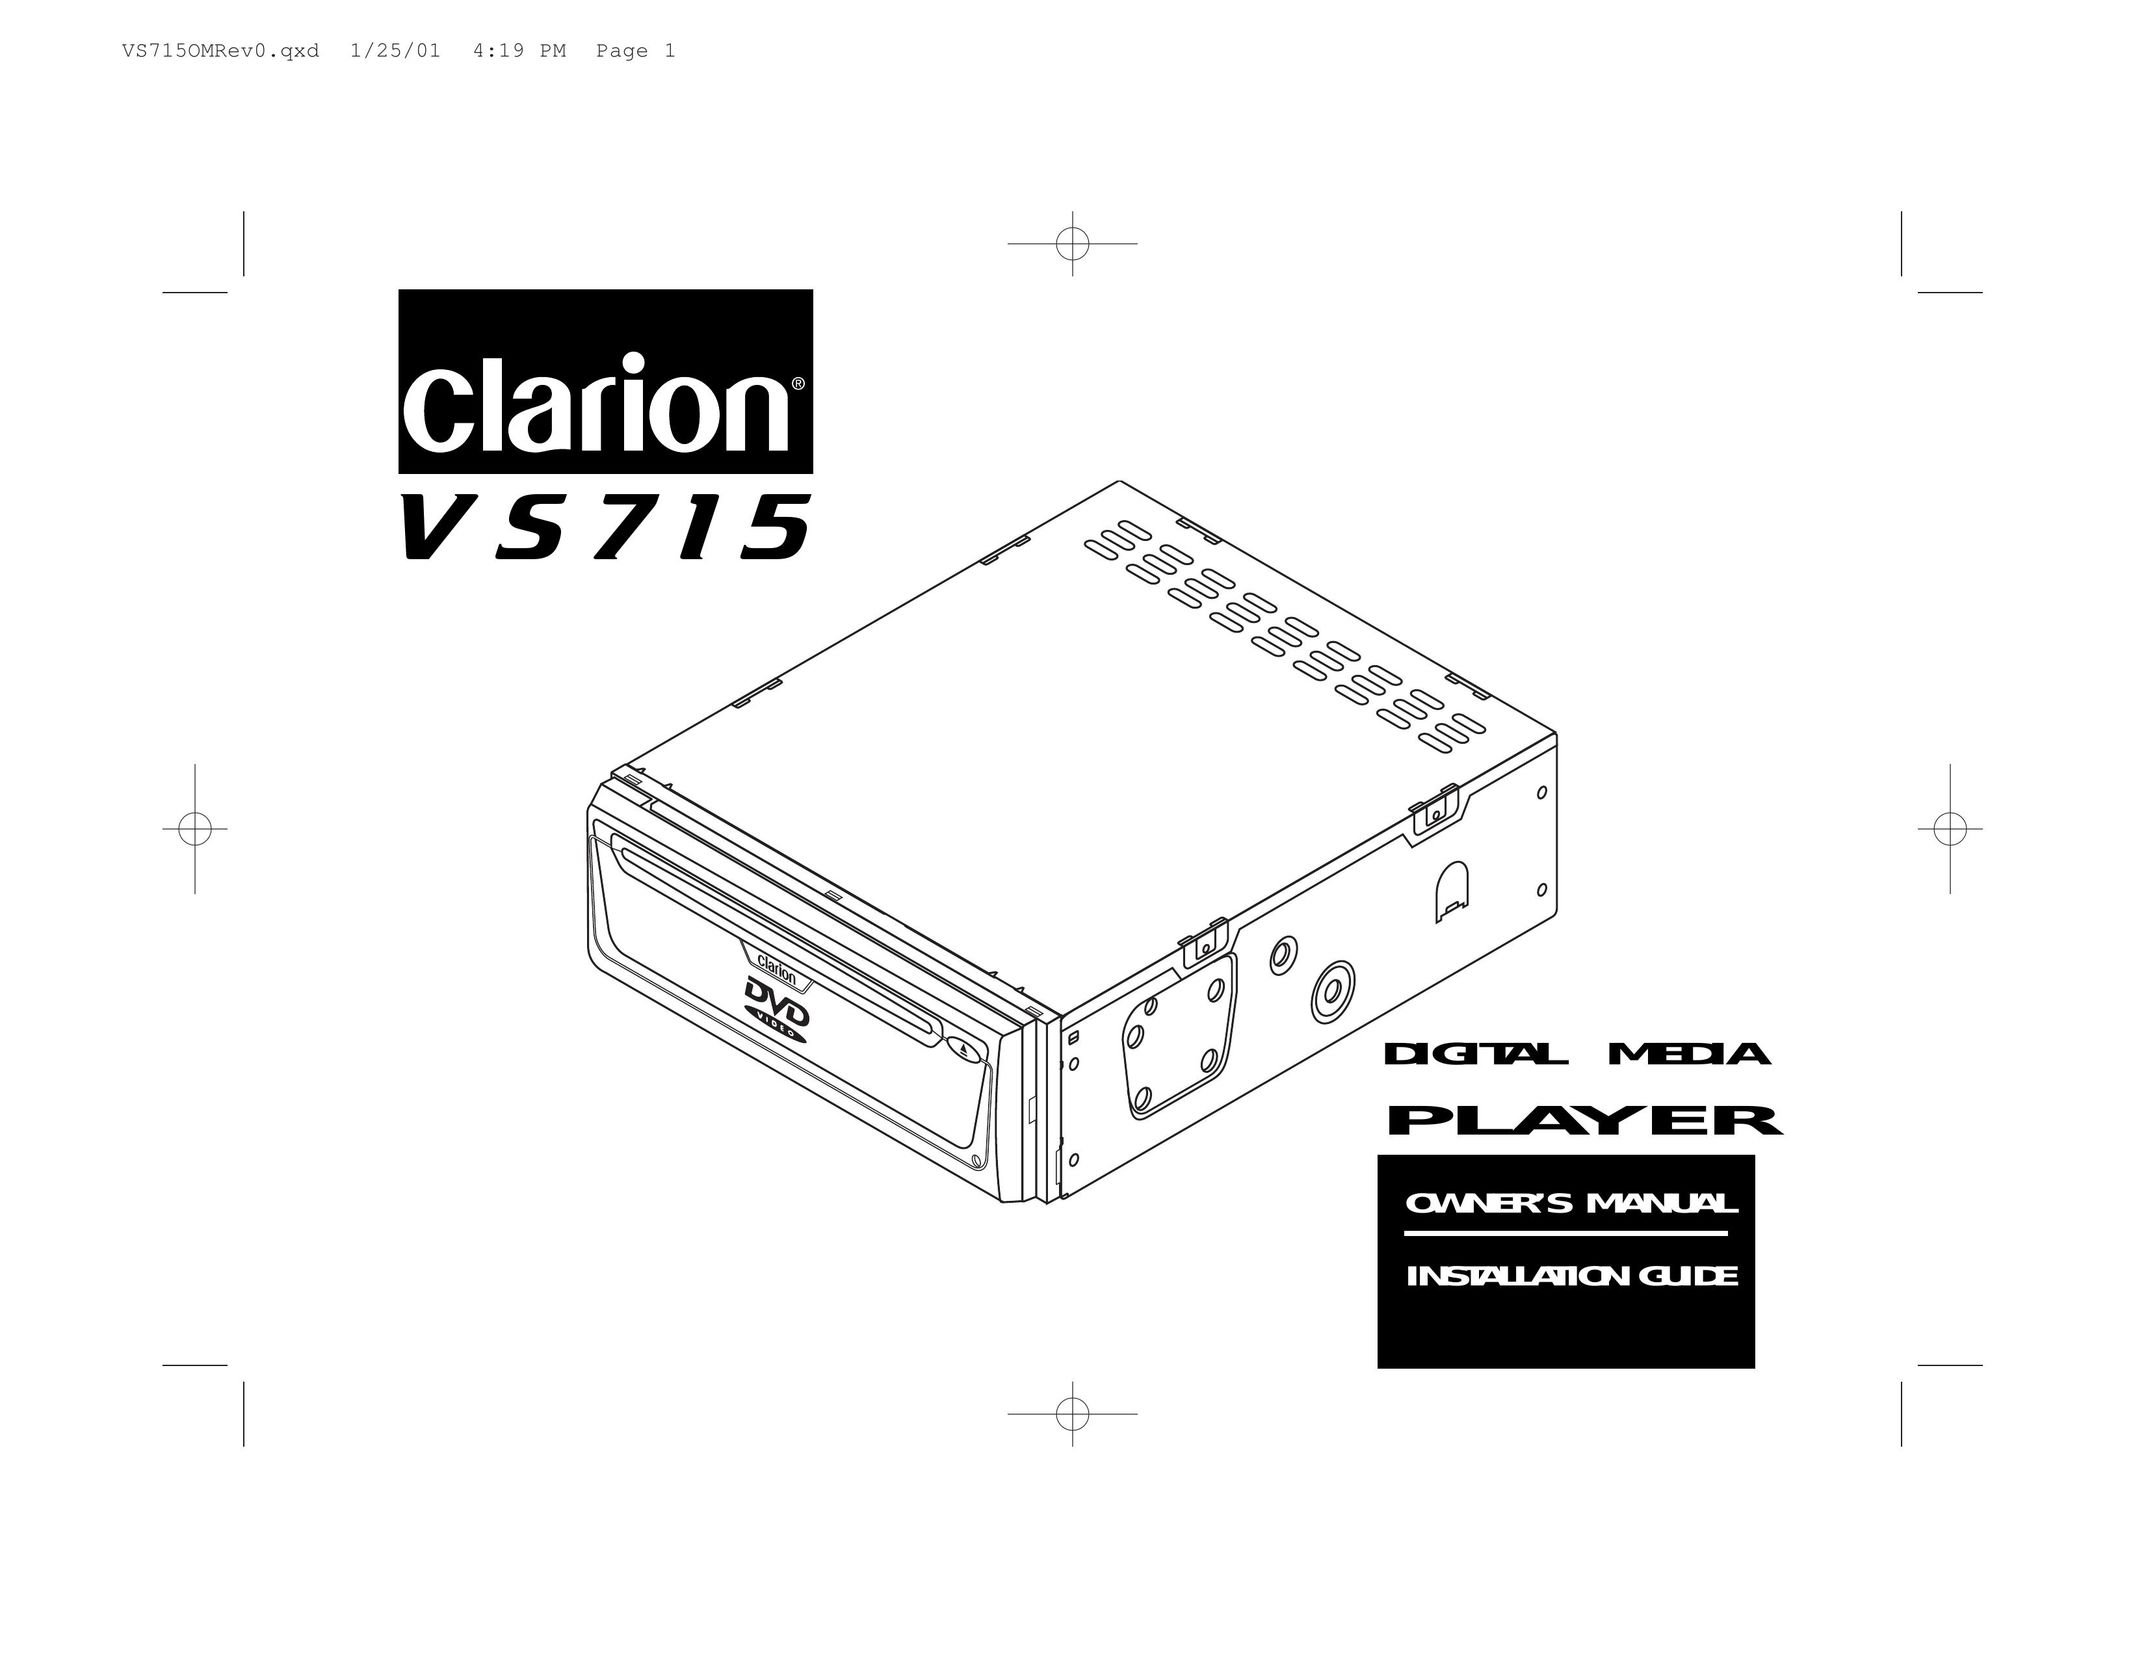 Clarion VS715 DVD Player User Manual